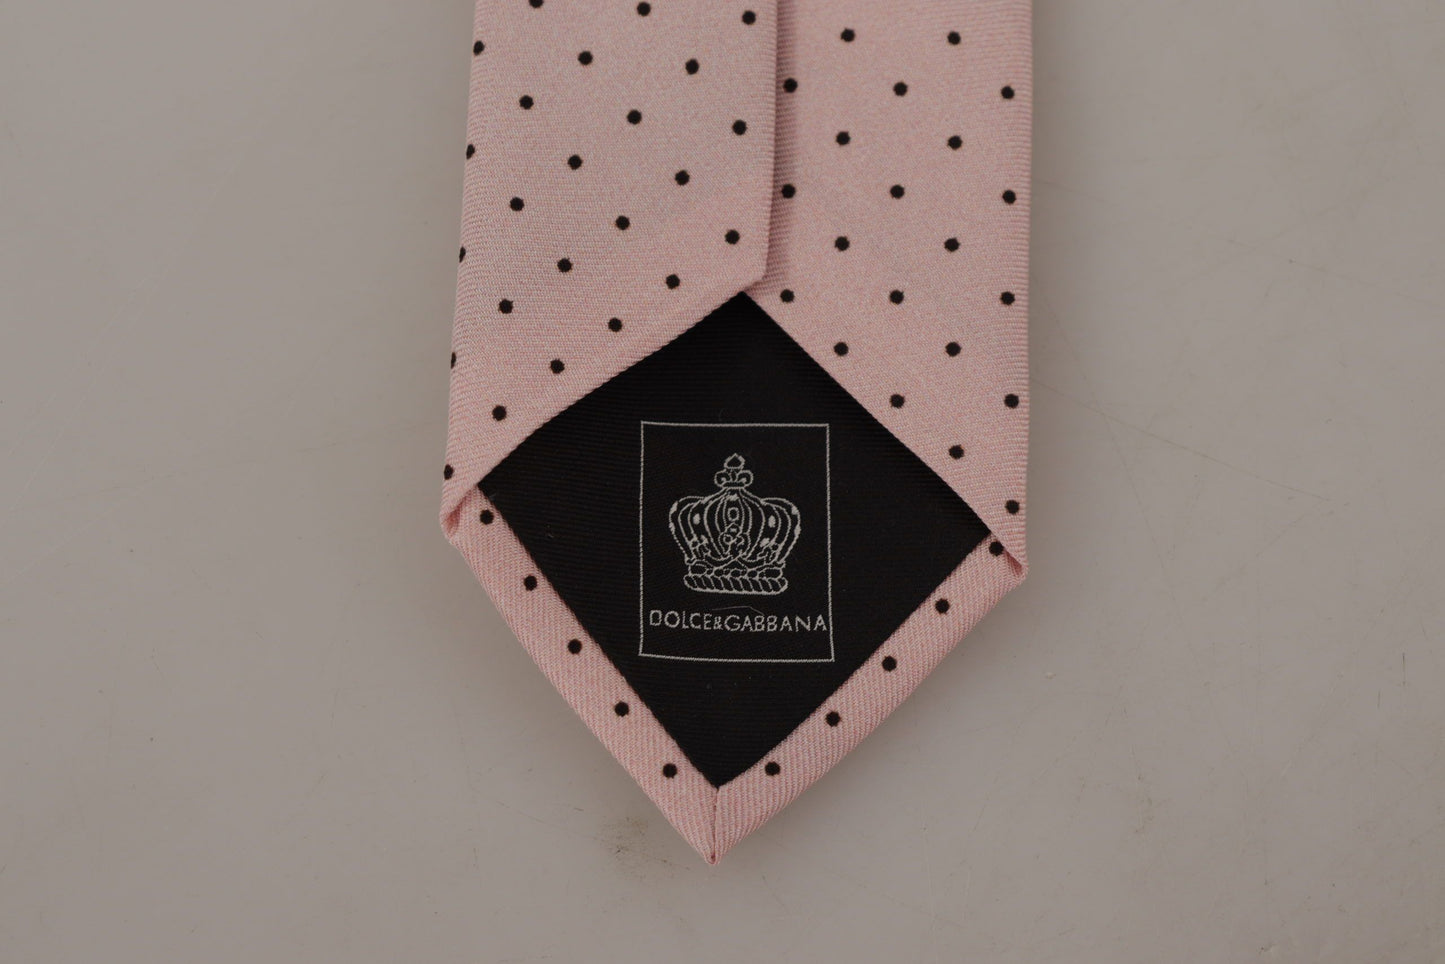 Elegant Pink Polka Dot Silk Tie